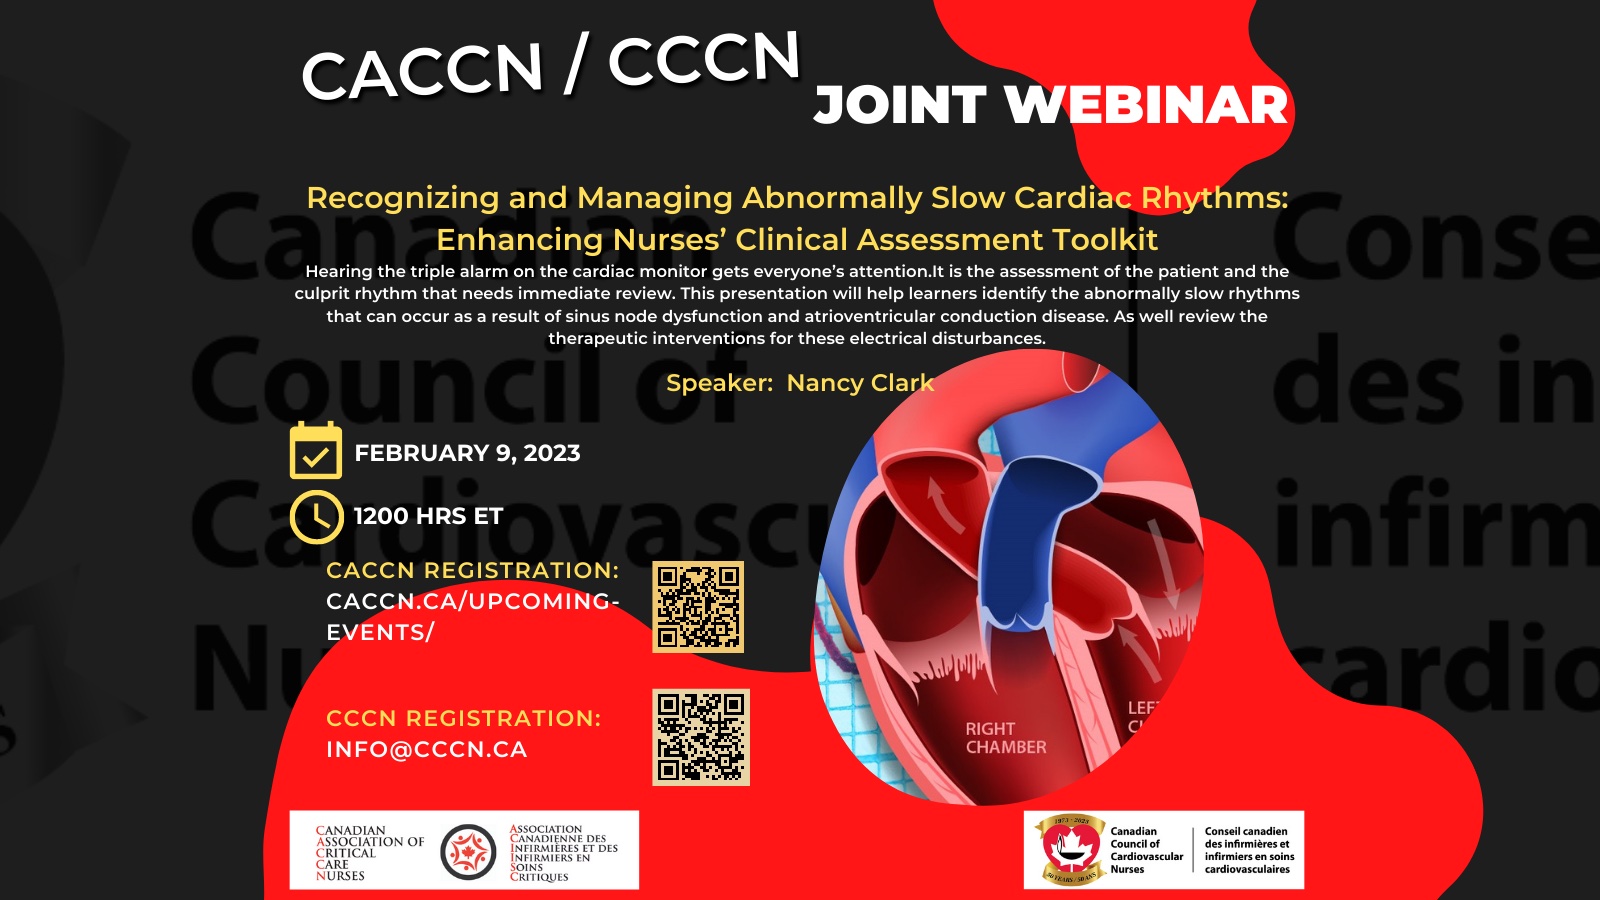 CACCN/CCCN webinar Feb 9, 2023 updated